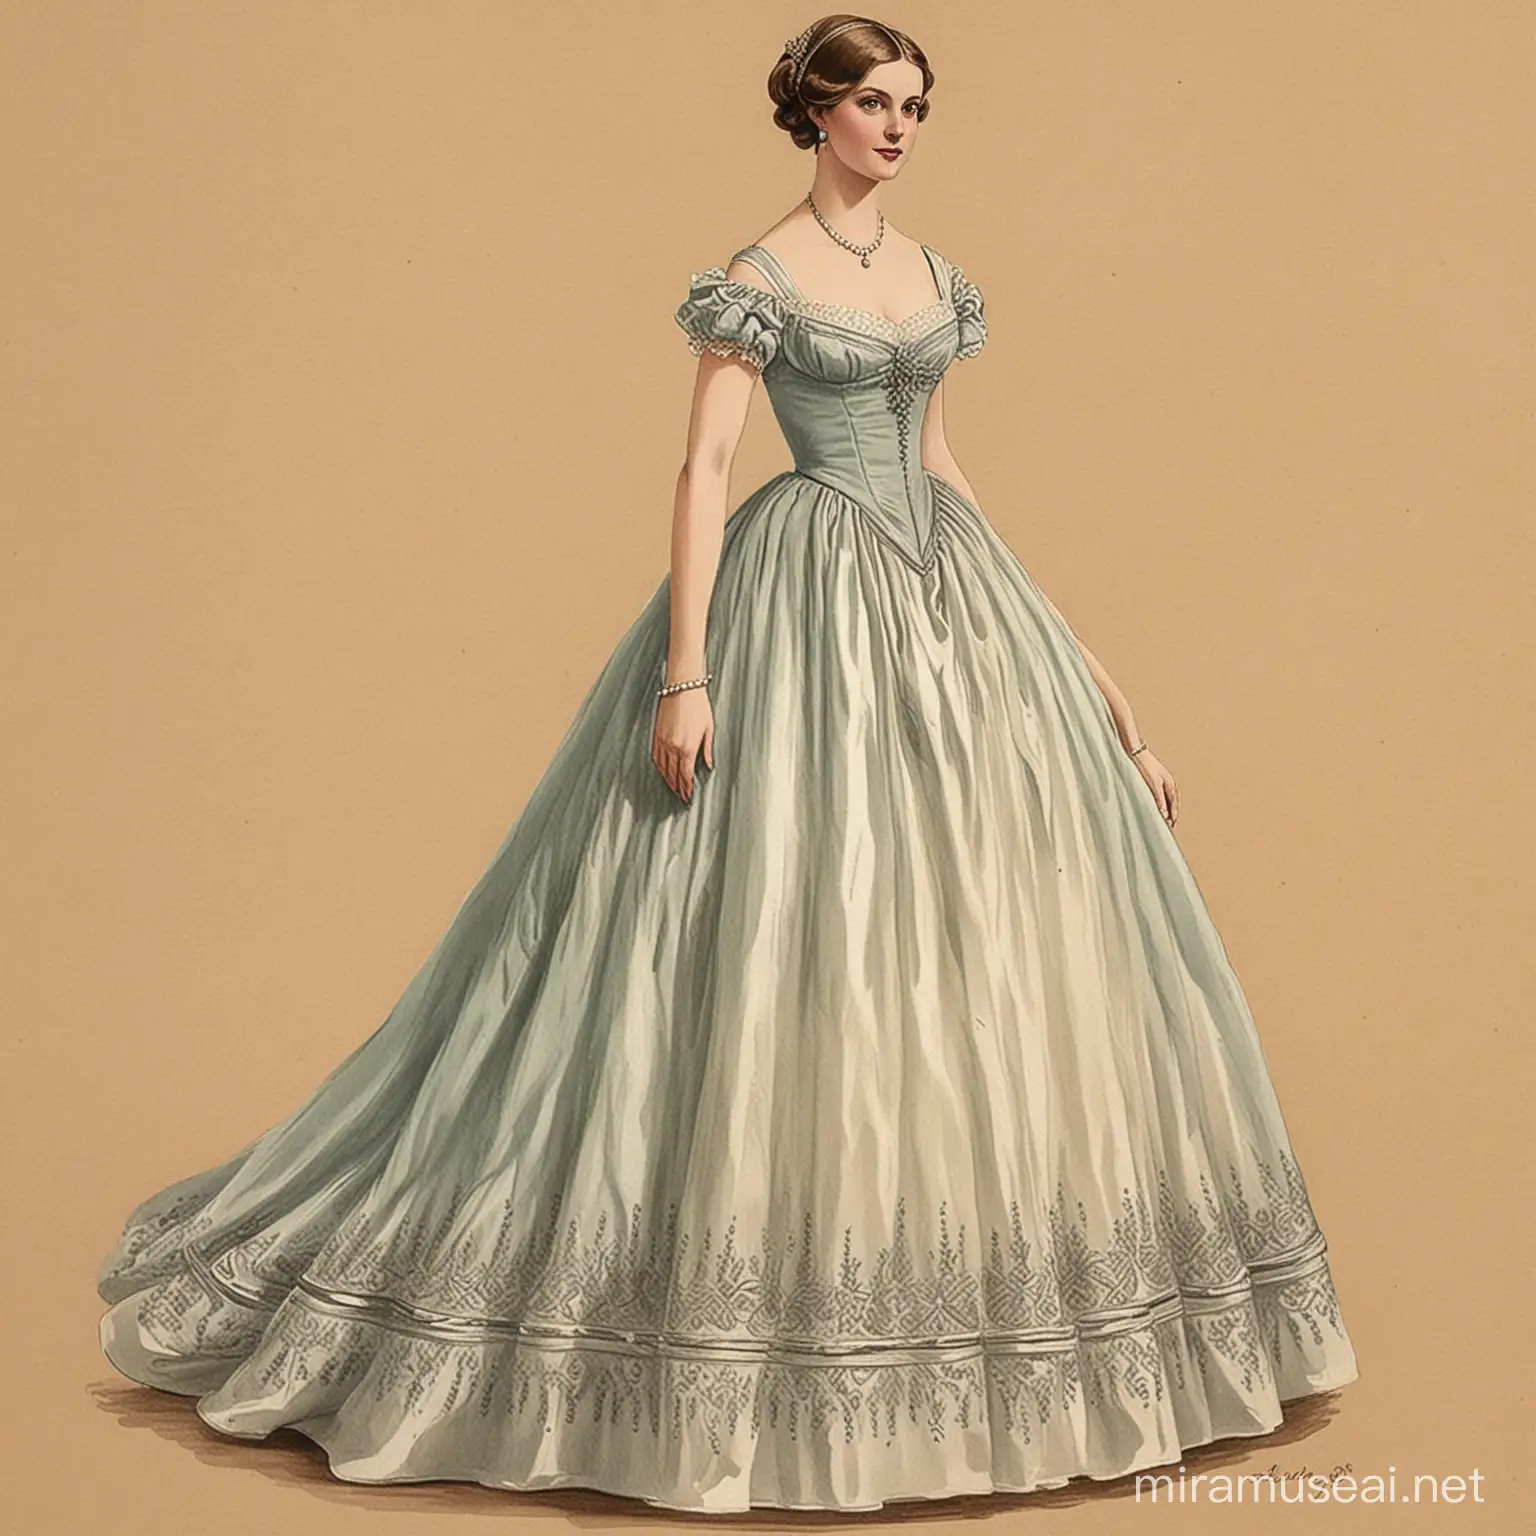 Vintage Painting of Elegant 1800s Ladies Empire Line Ballgown